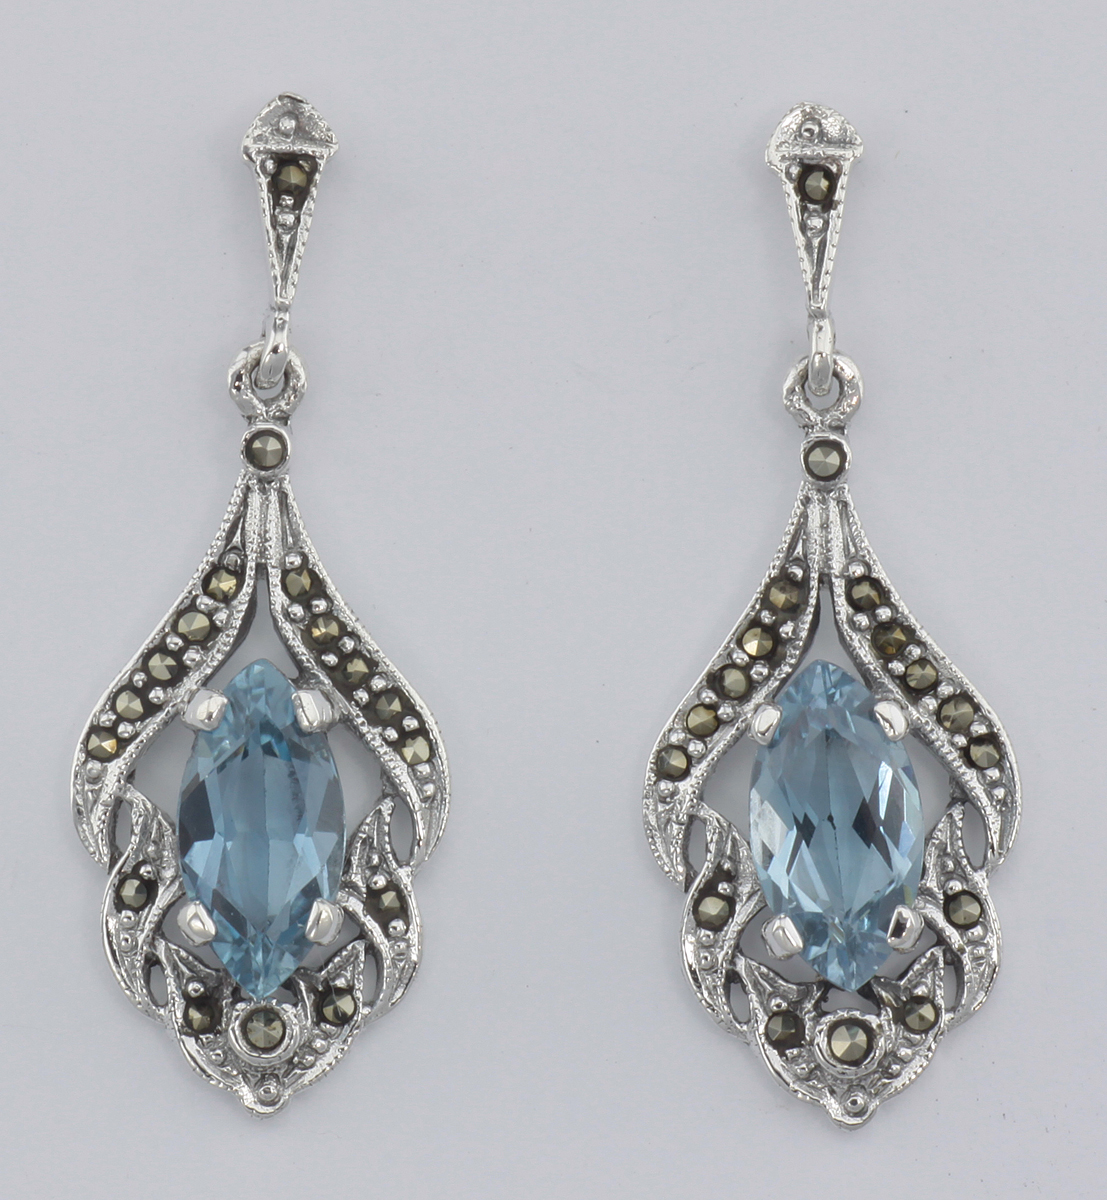 antique style blue topaz marcasite earrings sterling silver SXTVELL